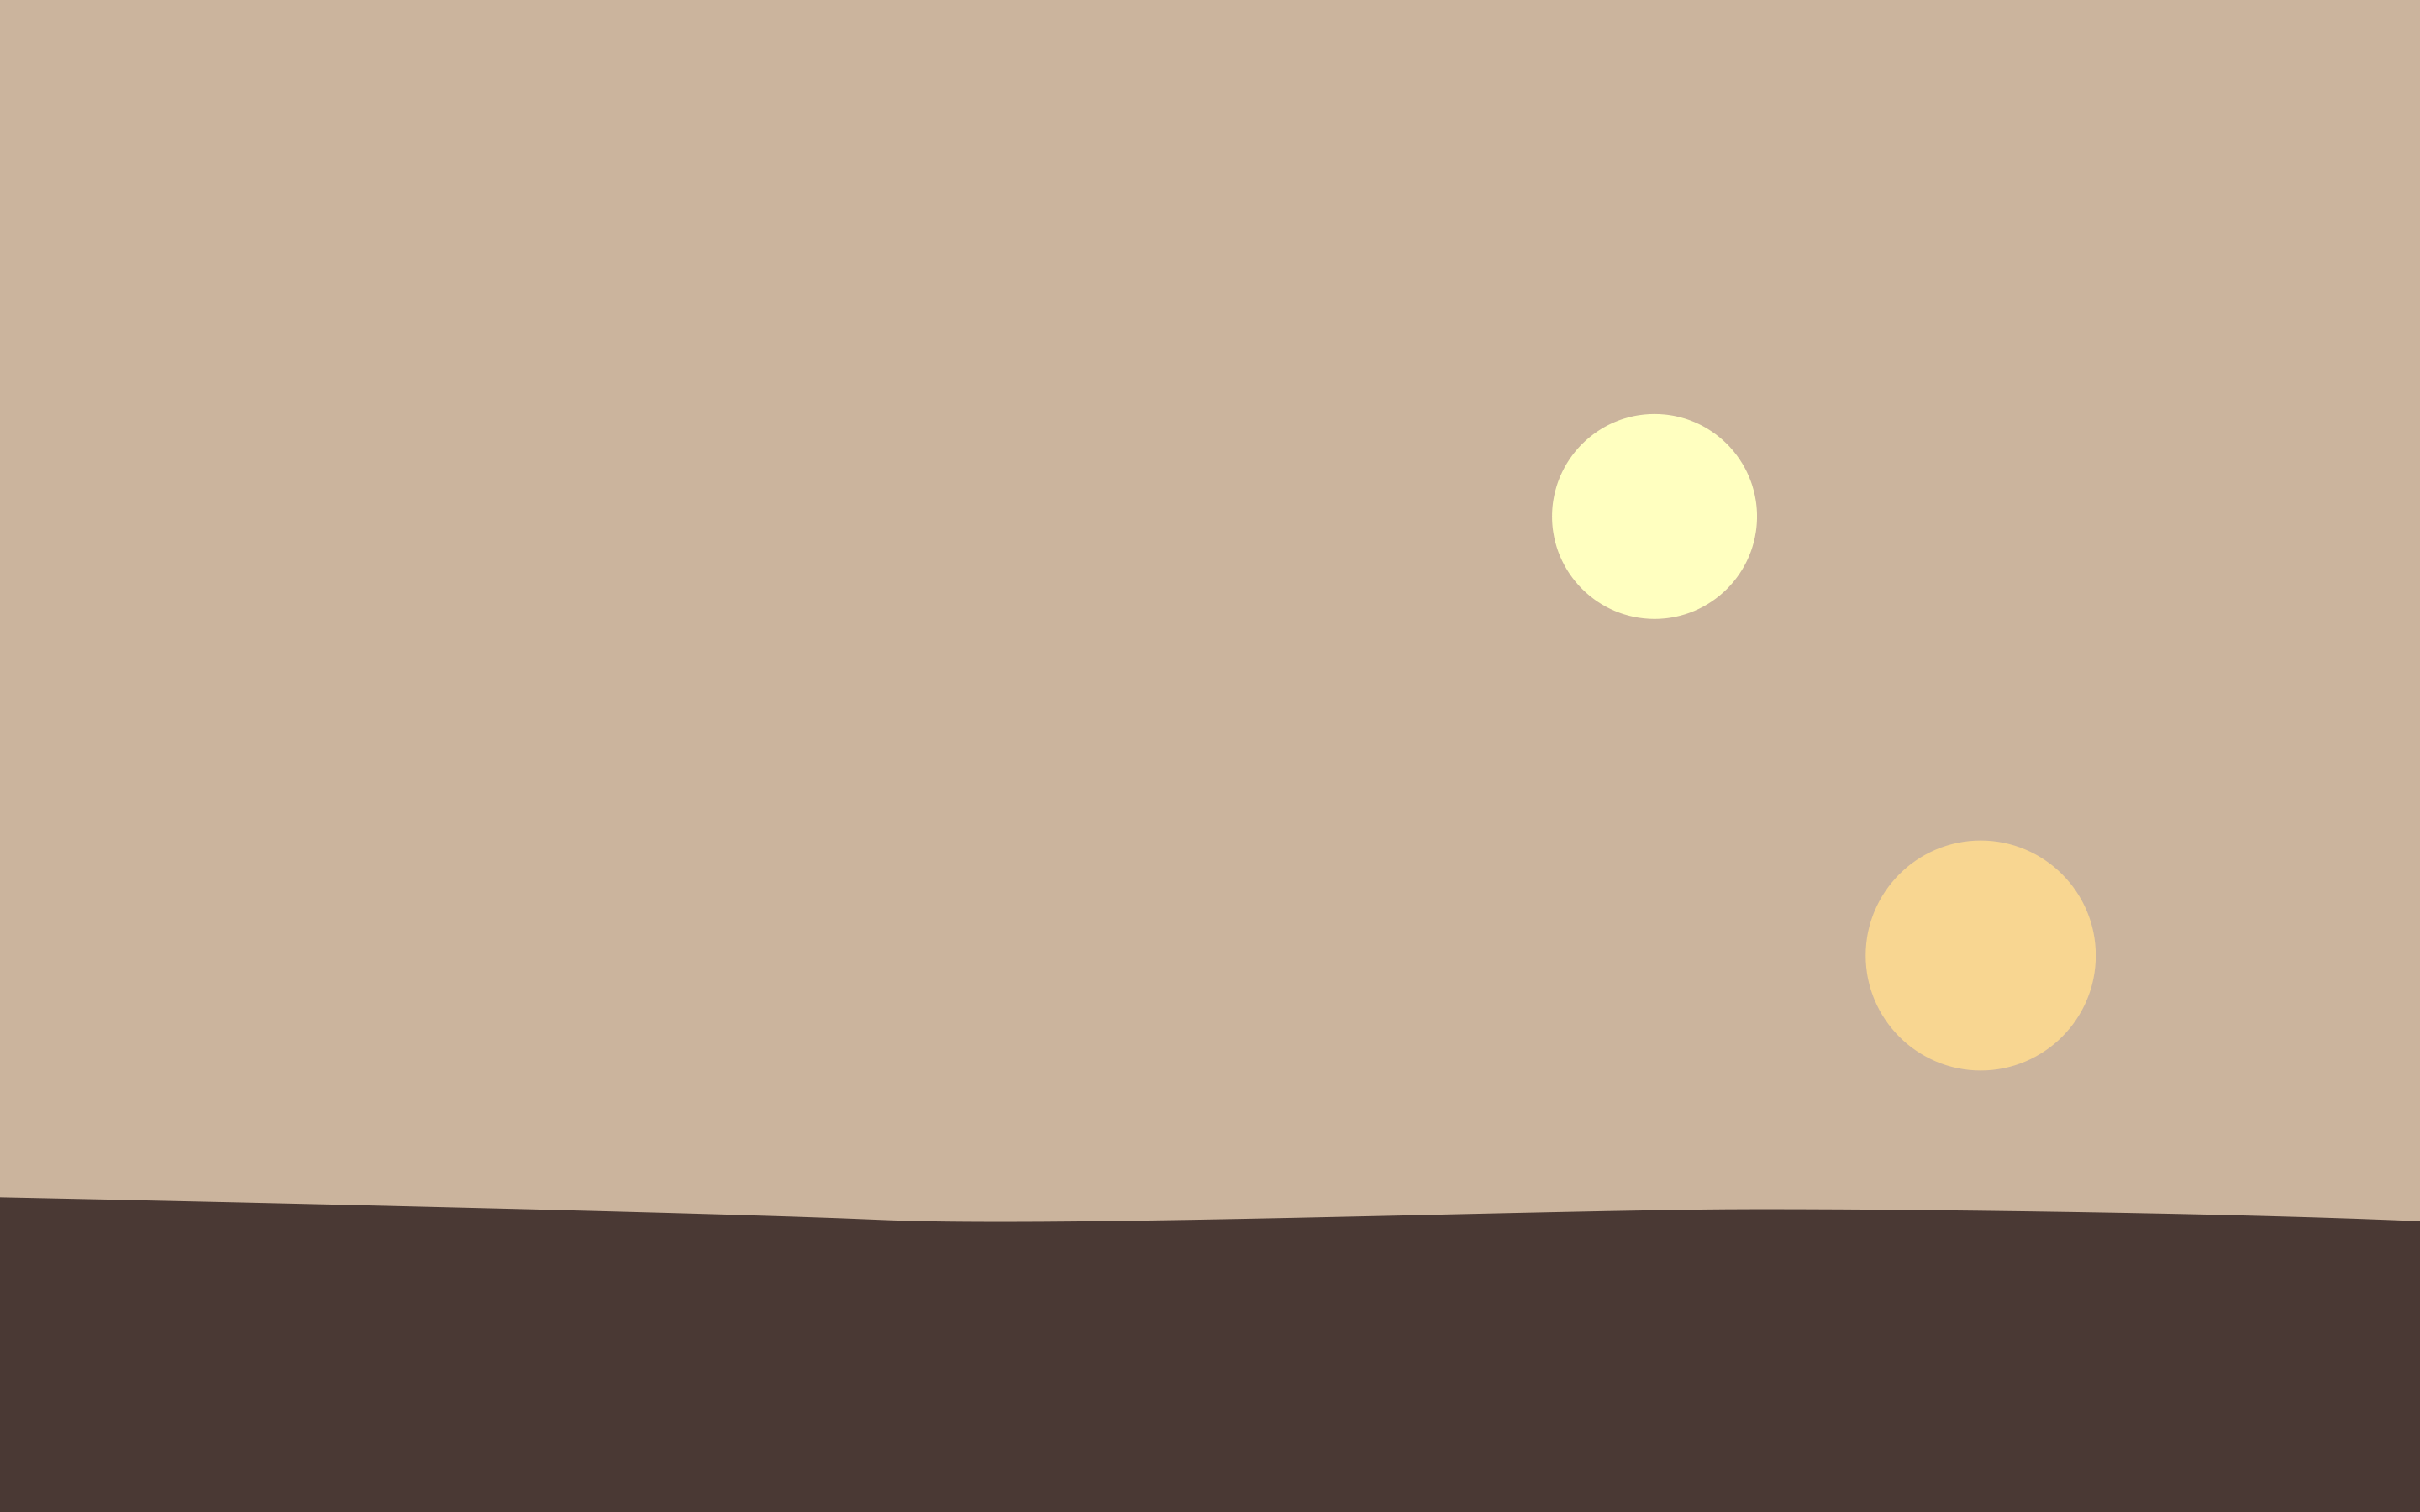 General 2880x1800 Star Wars minimalism desert Tatooine suns beige movies science fiction sky